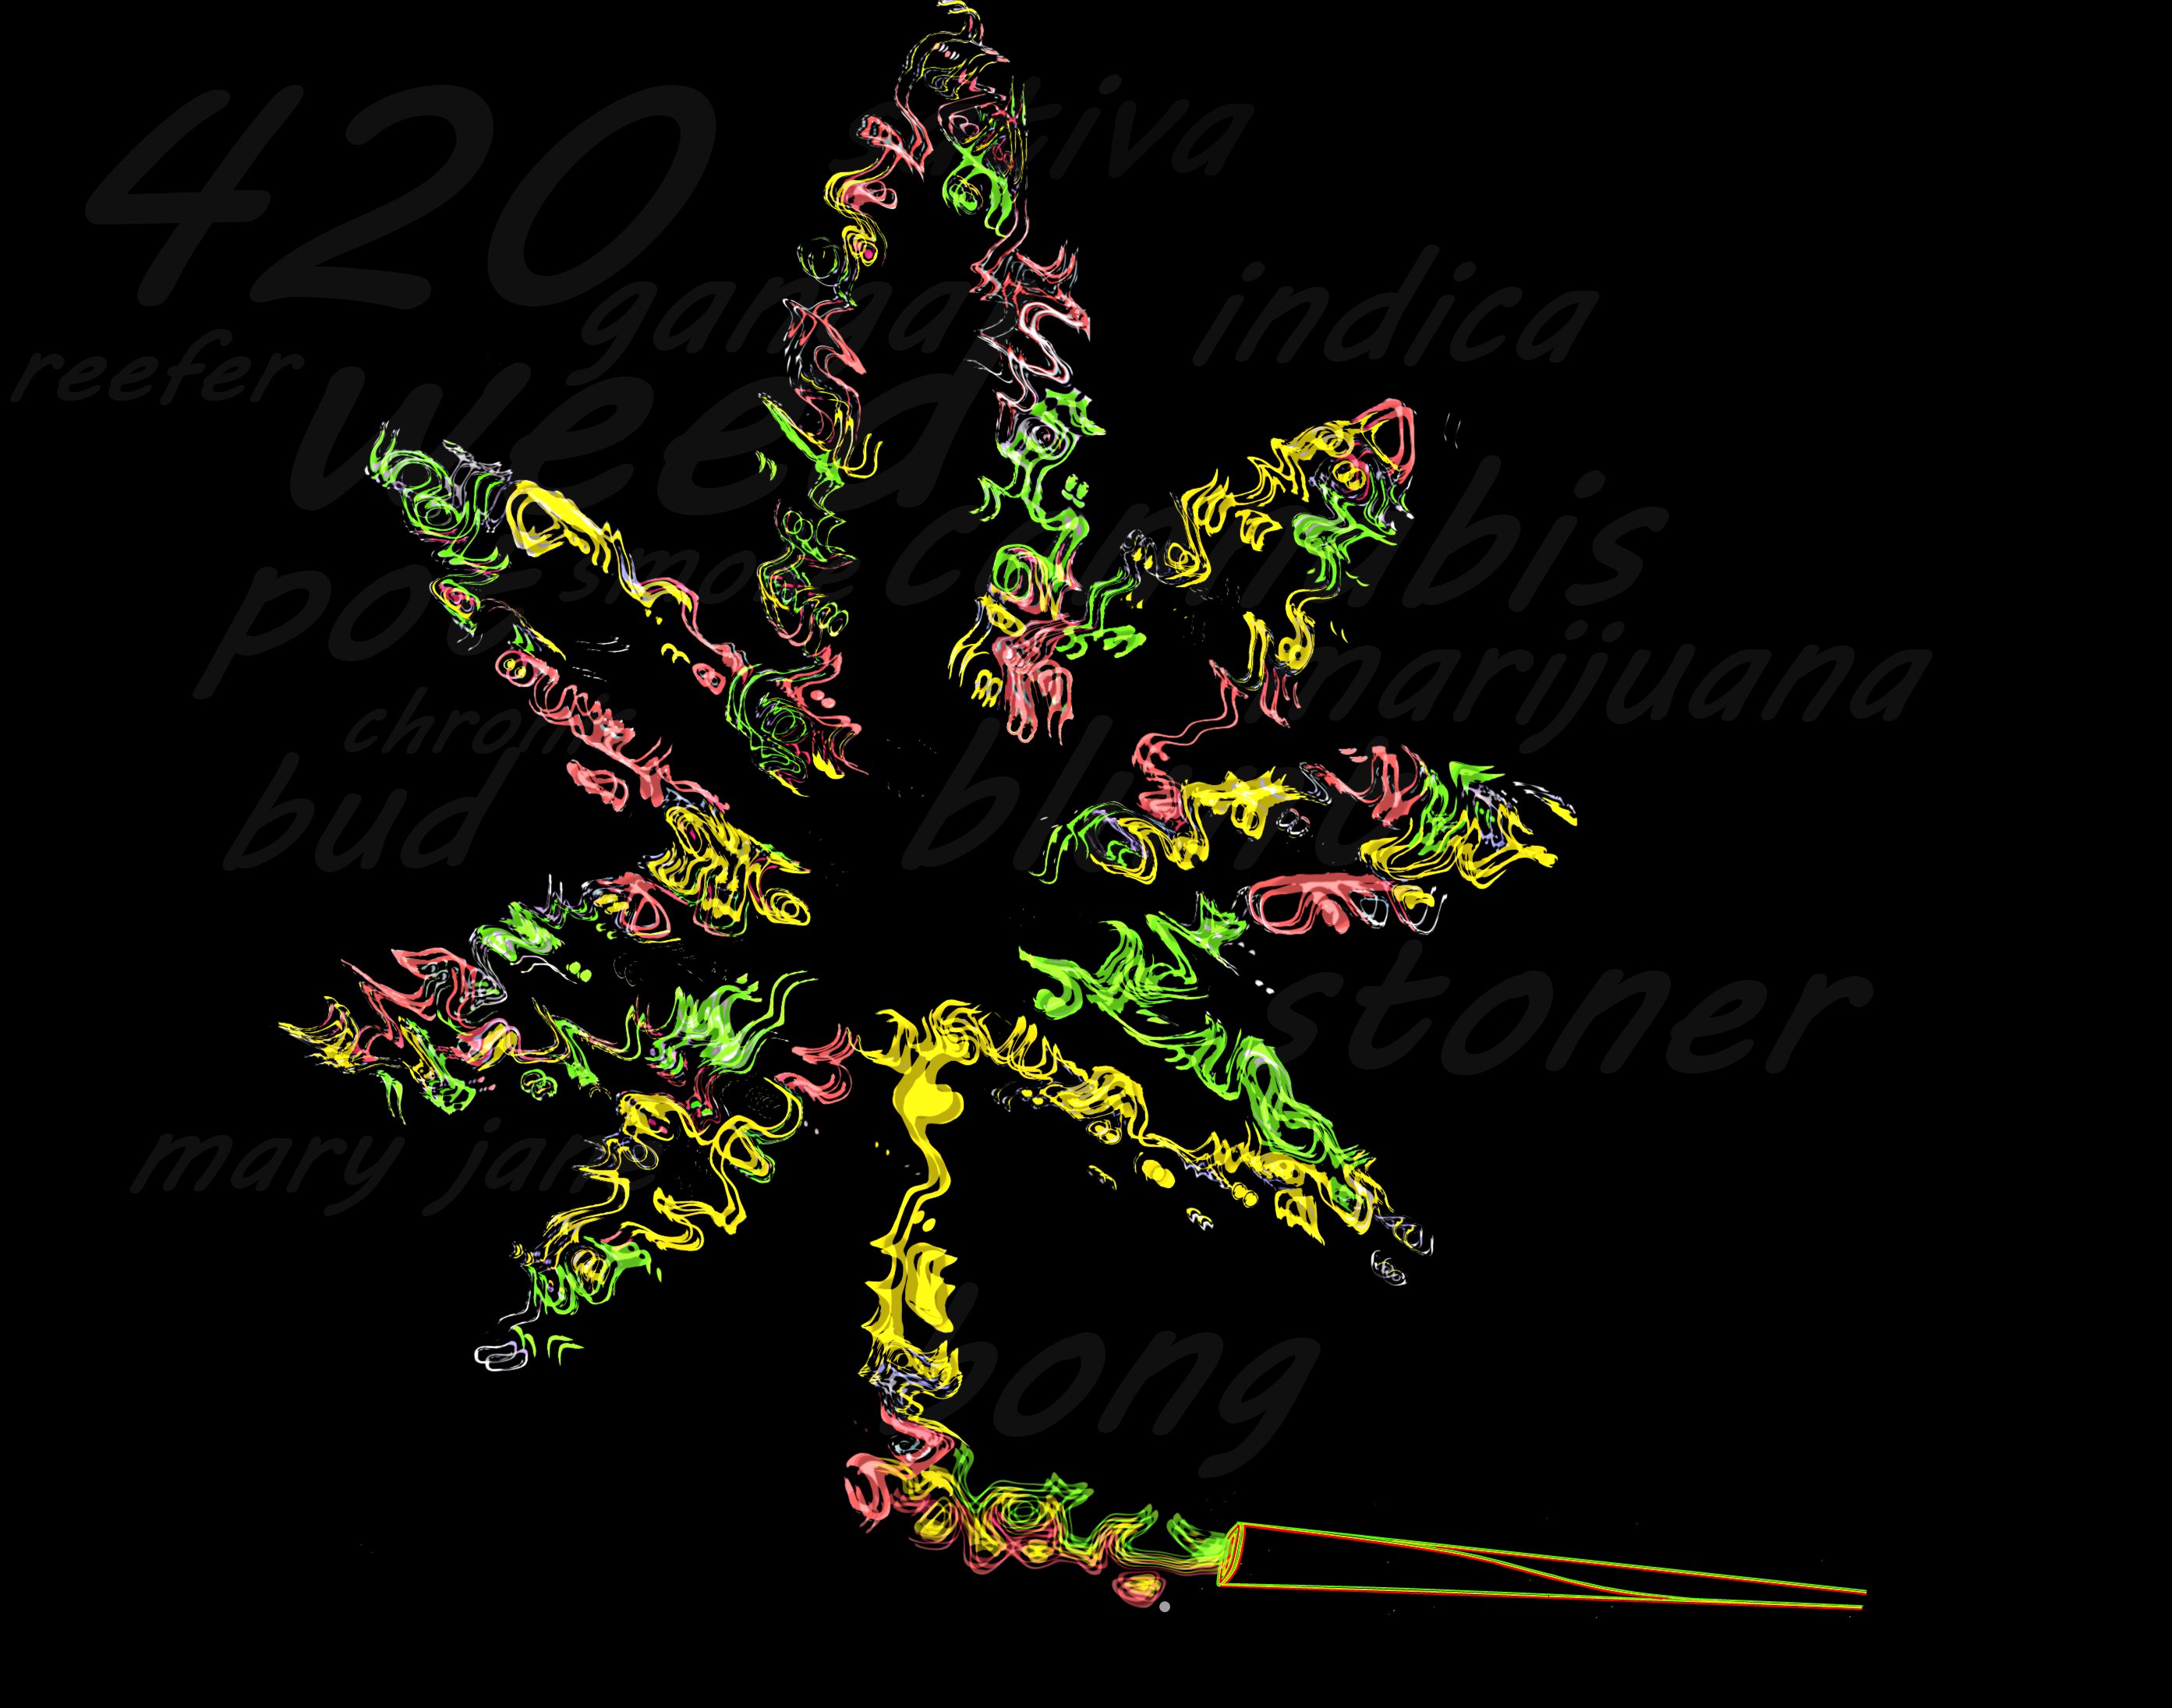 420, Marijuana, Weed, Drugs, Psychedelic Wallpaper